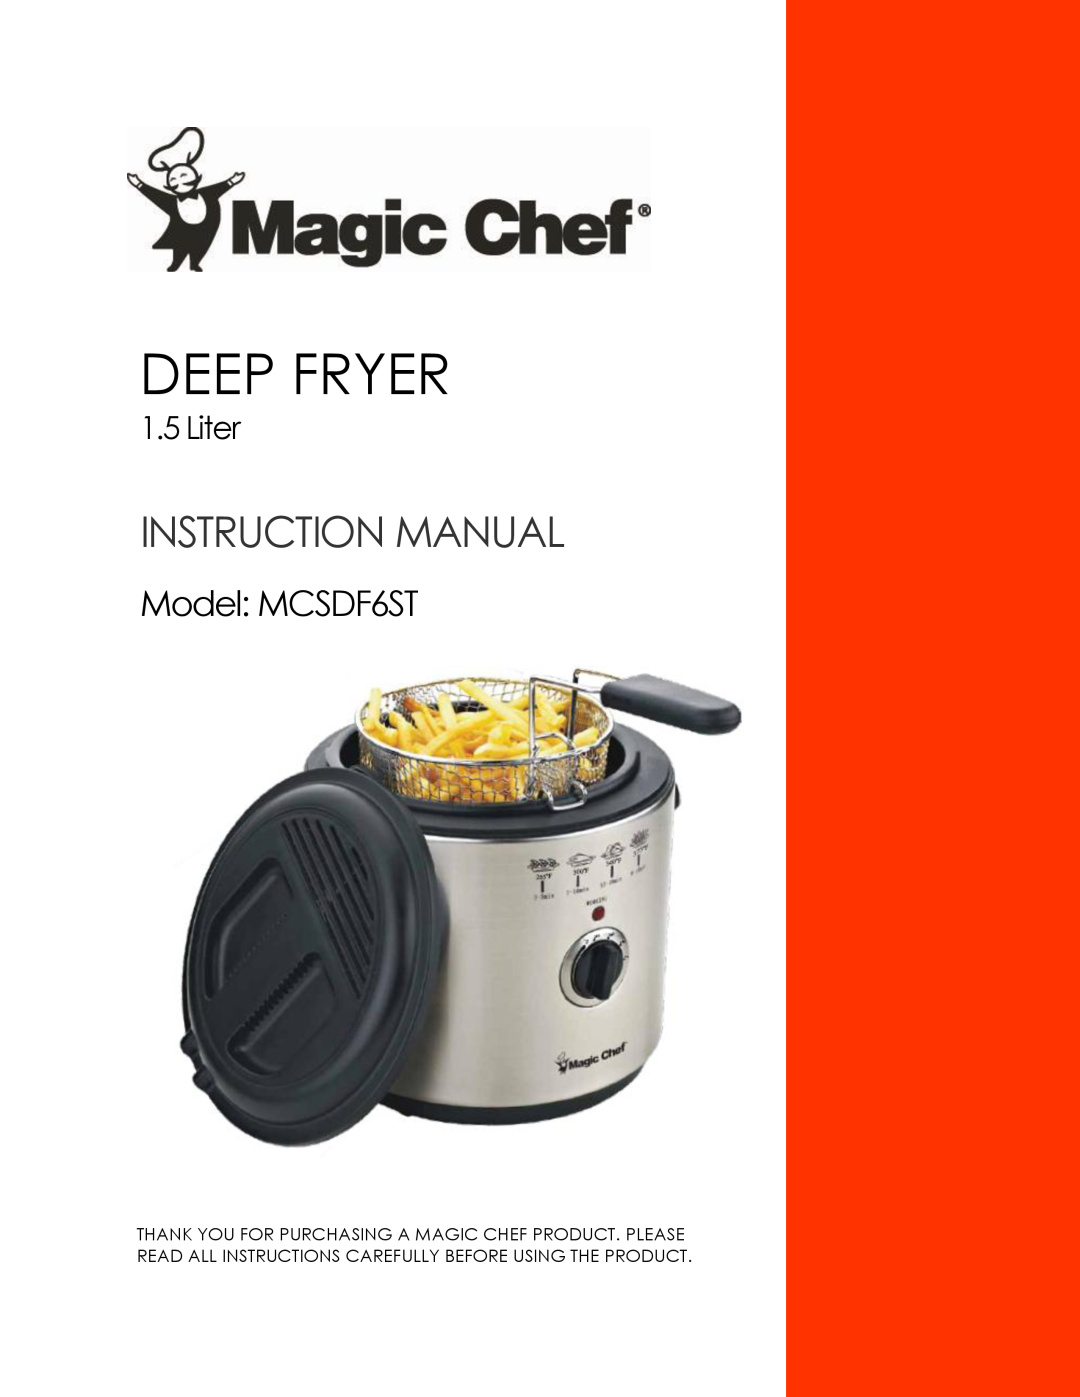 Magic Chef instruction manual Model MCSDF6ST, Deep Fryer, Liter 